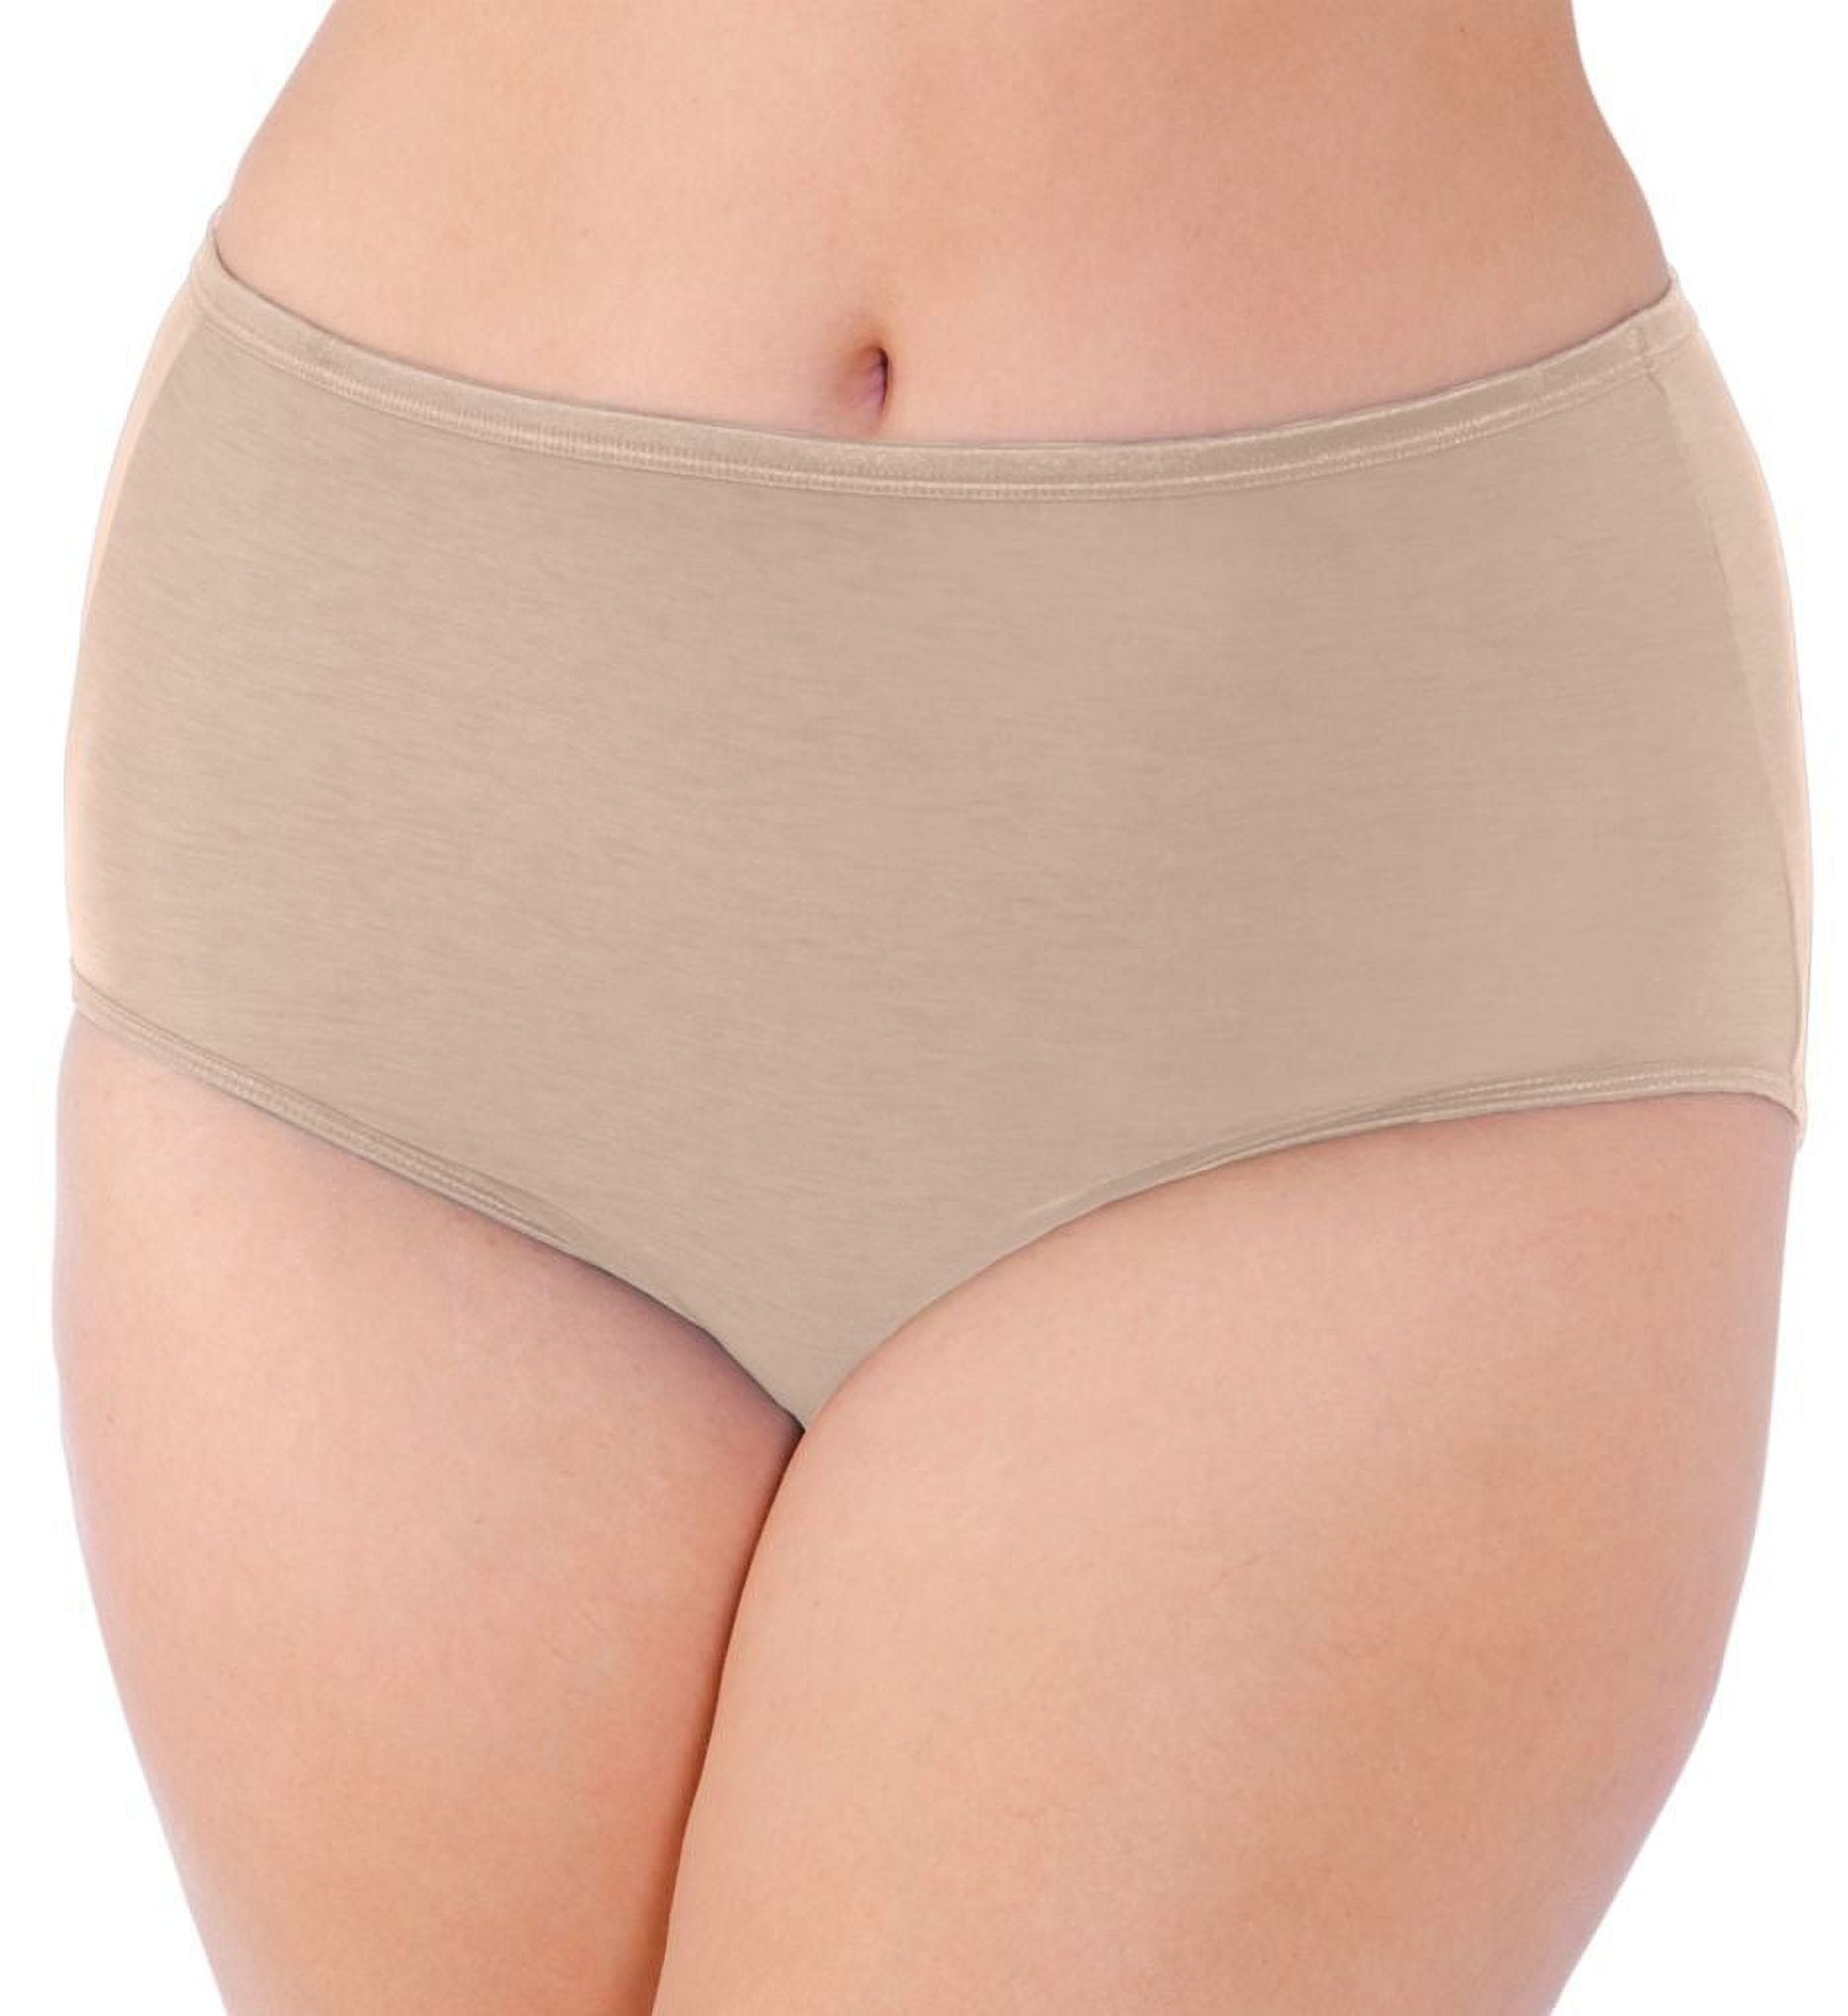 Buy Vanity Fair Women's Plus Size Illumination Brief Panty